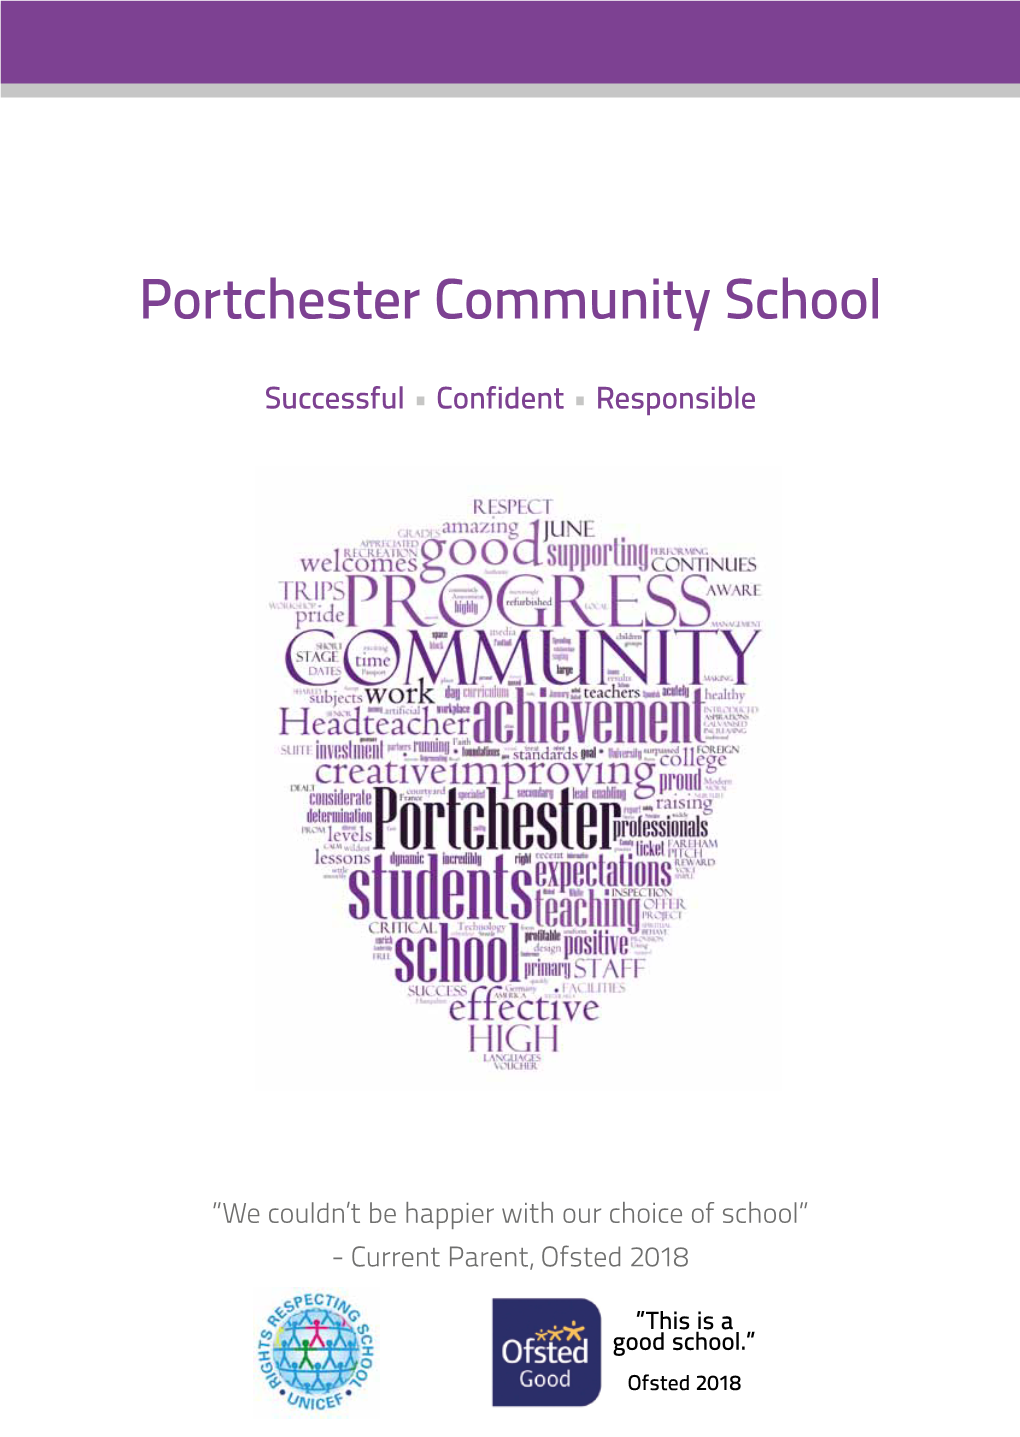 Portchester Community School